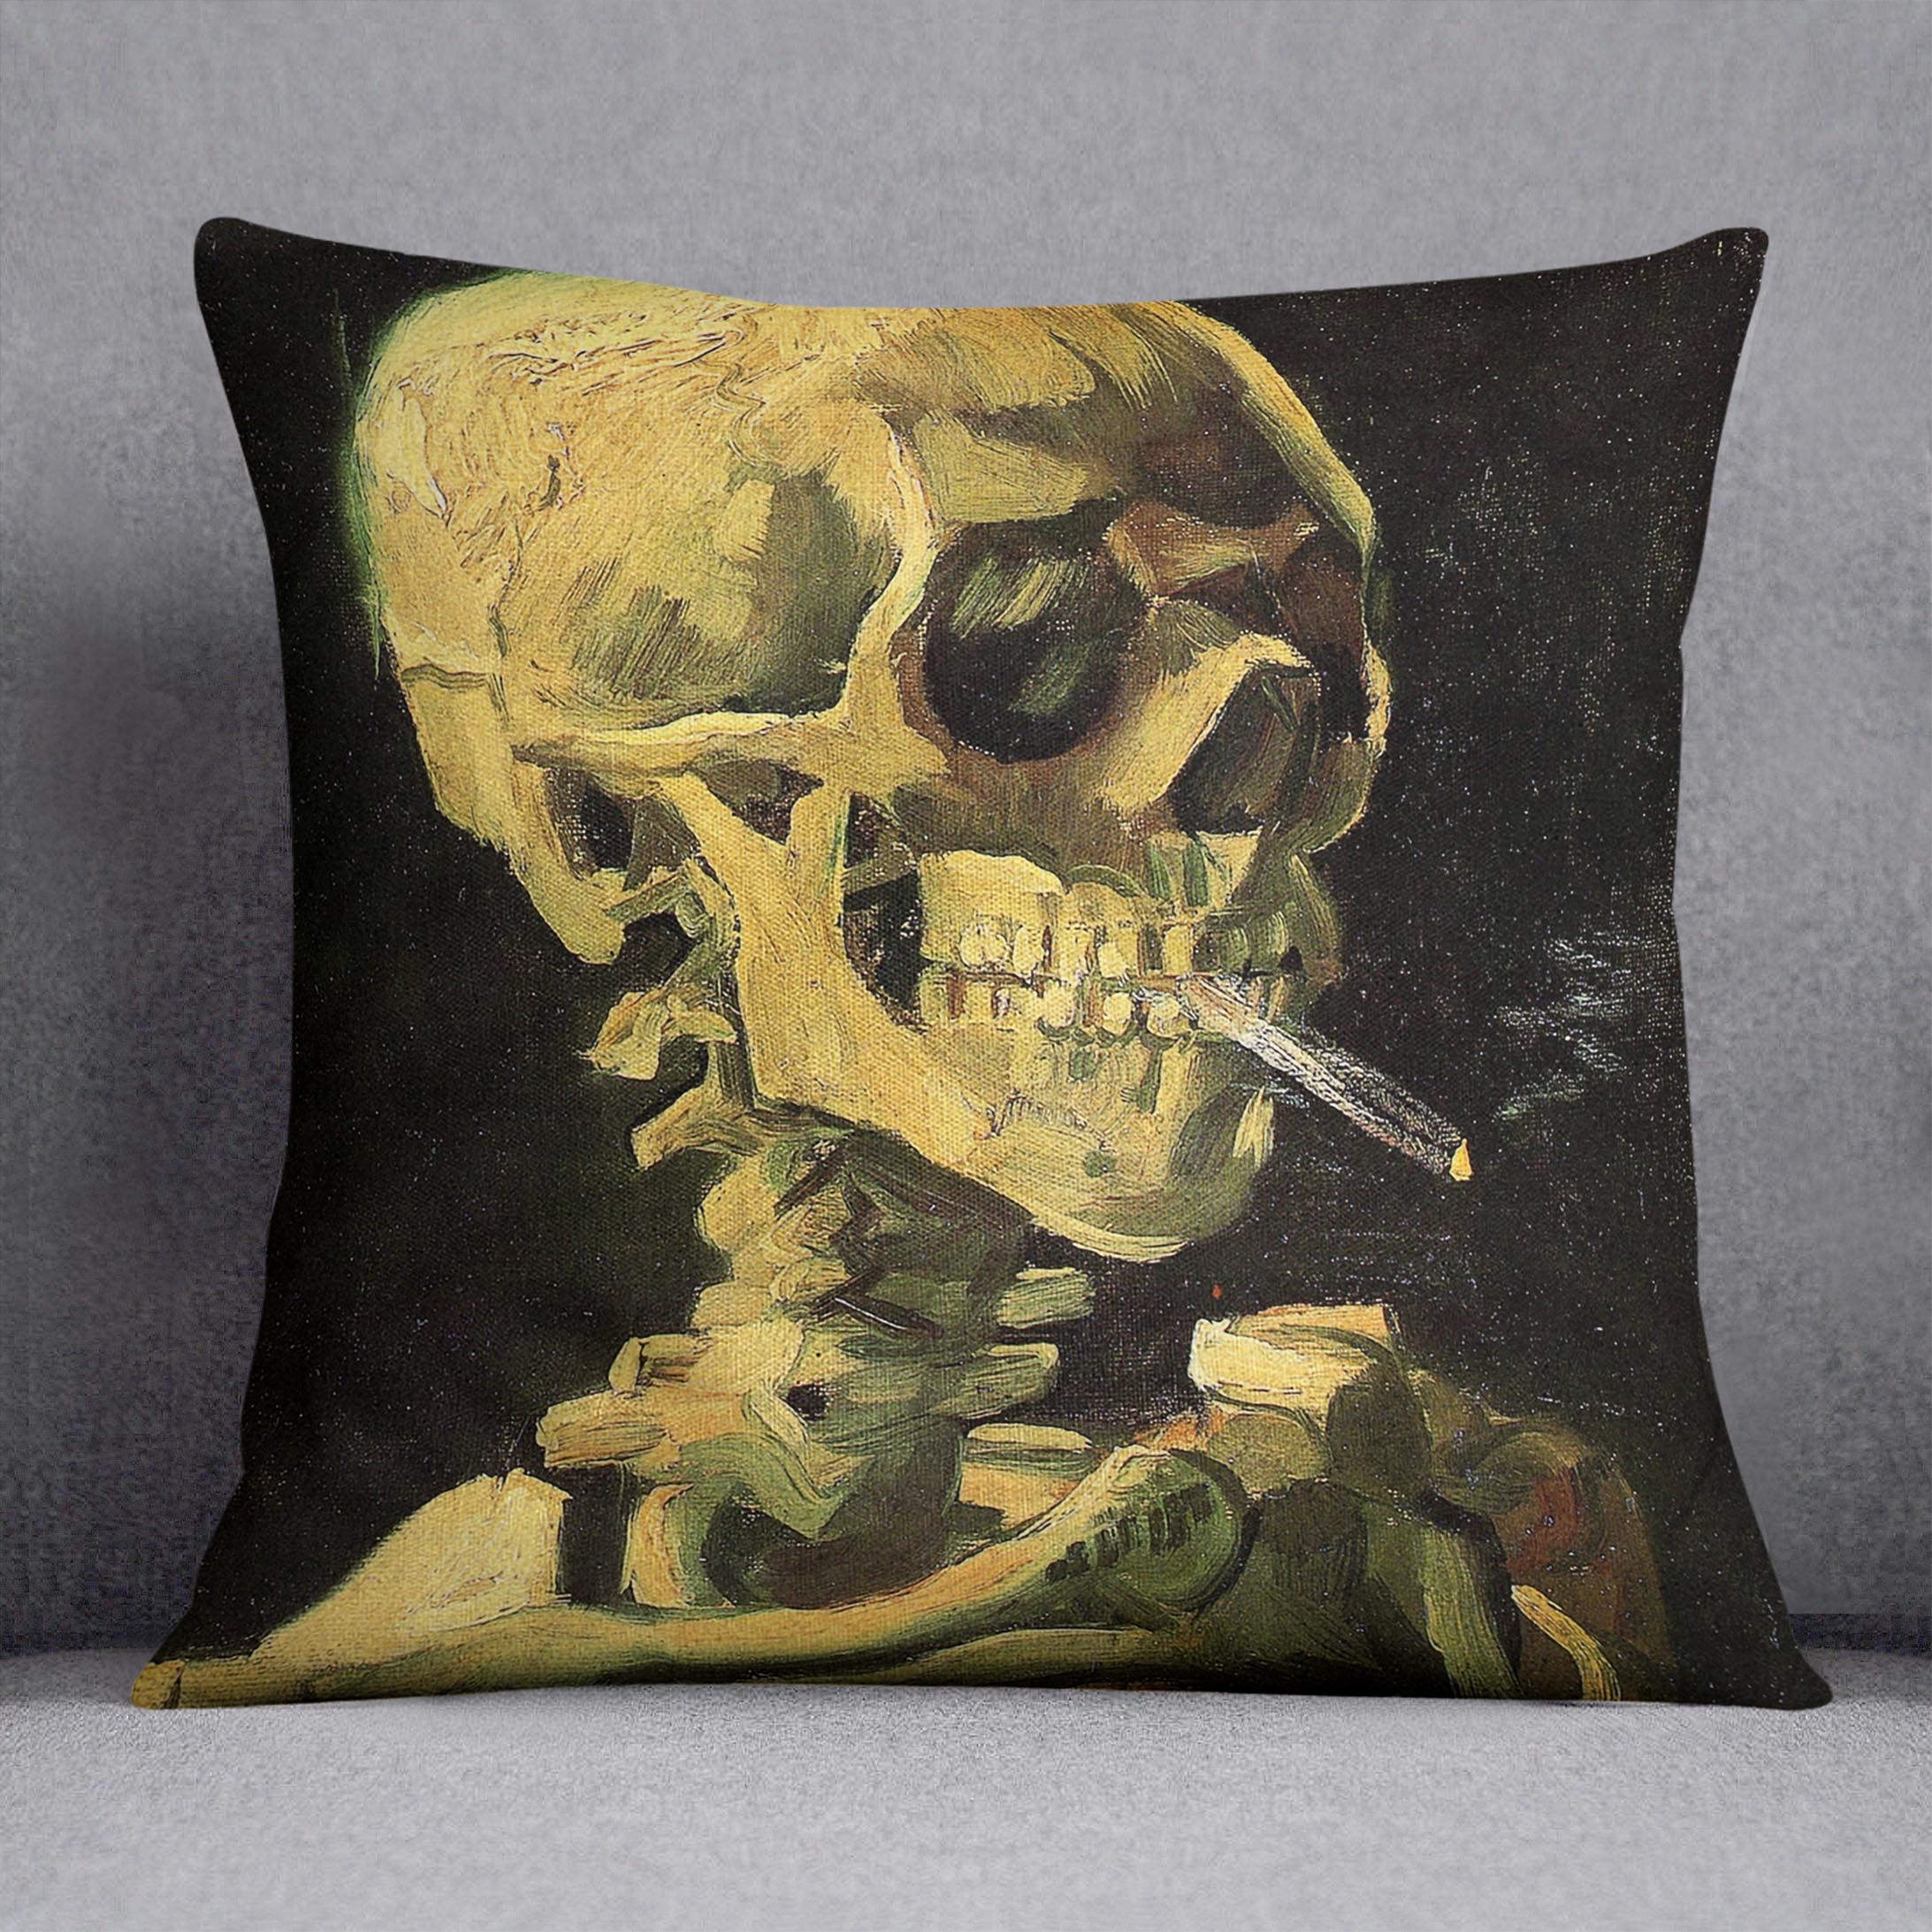 Skull with Burning Cigarette by Van Gogh Cushion